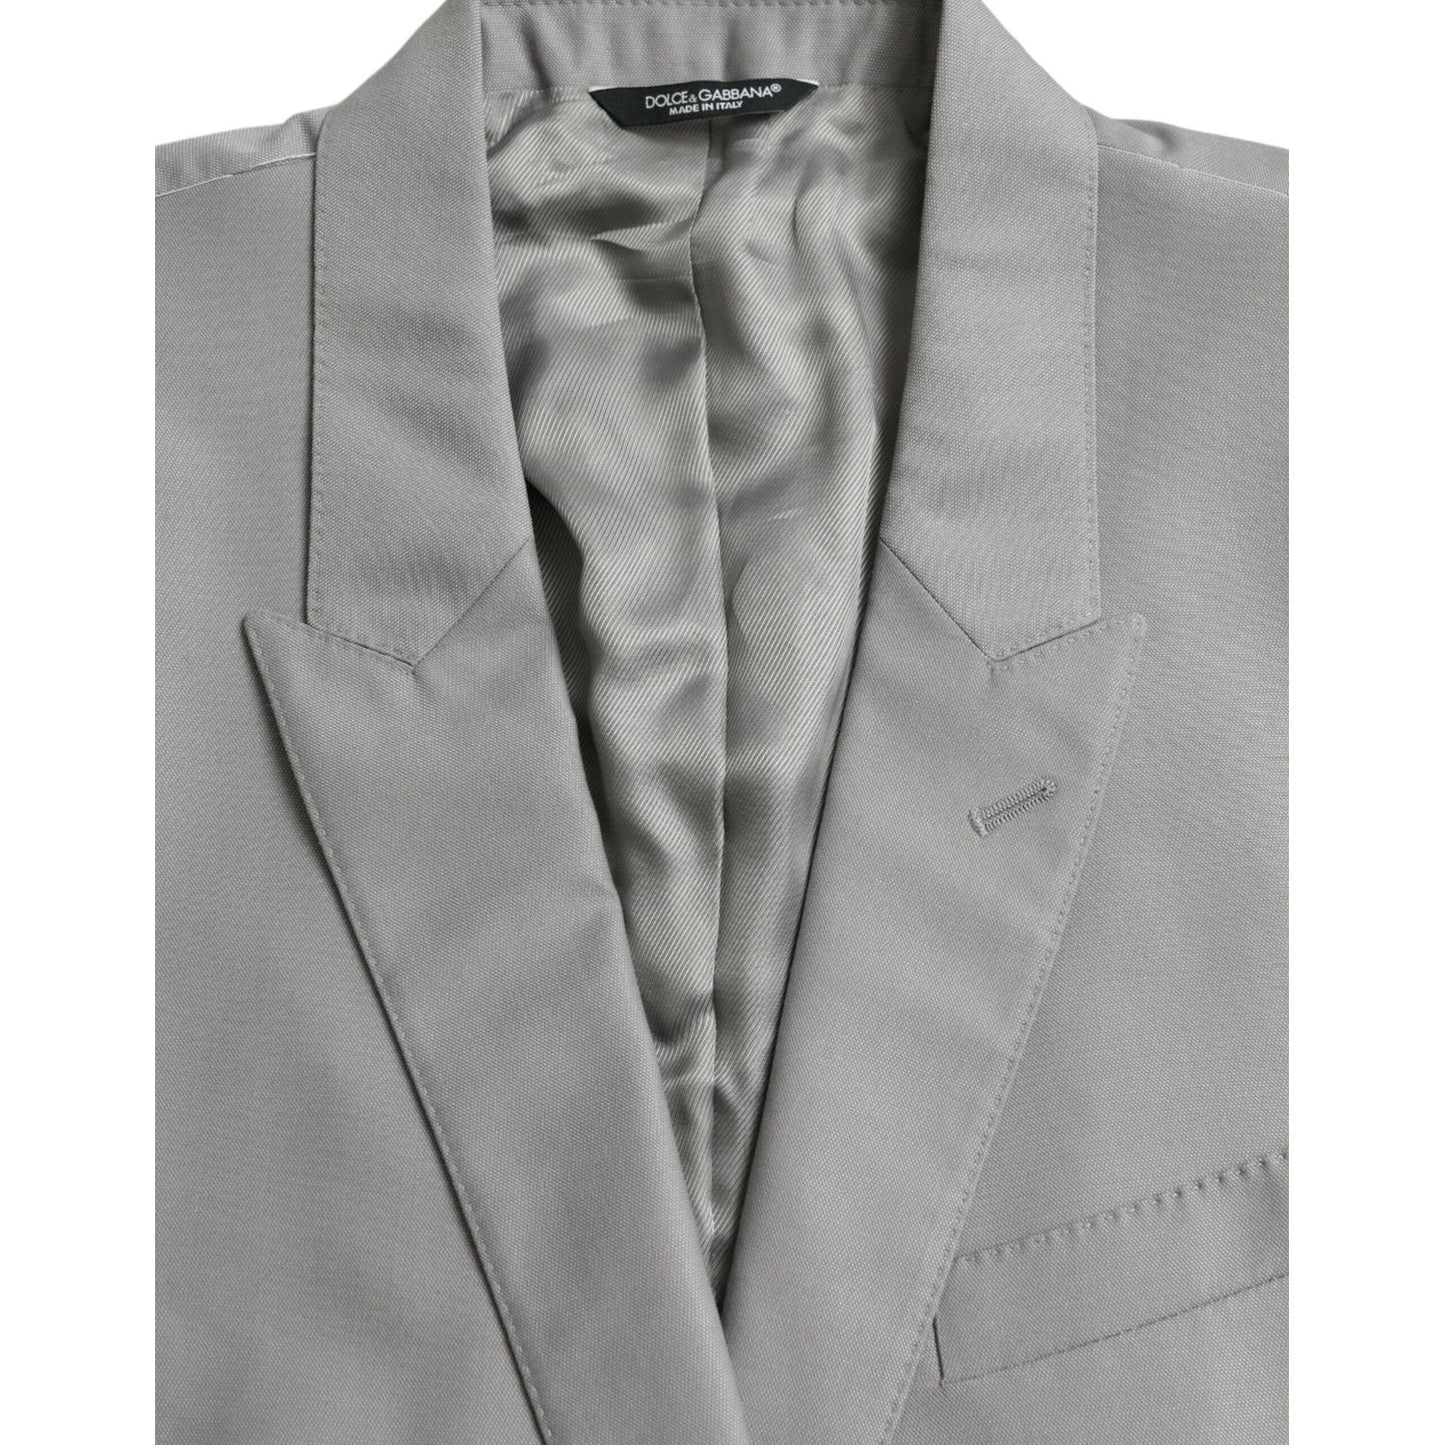 Dolce & Gabbana Gray Wool Peak Single Breasted Coat Blazer gray-wool-peak-single-breasted-coat-blazer-1